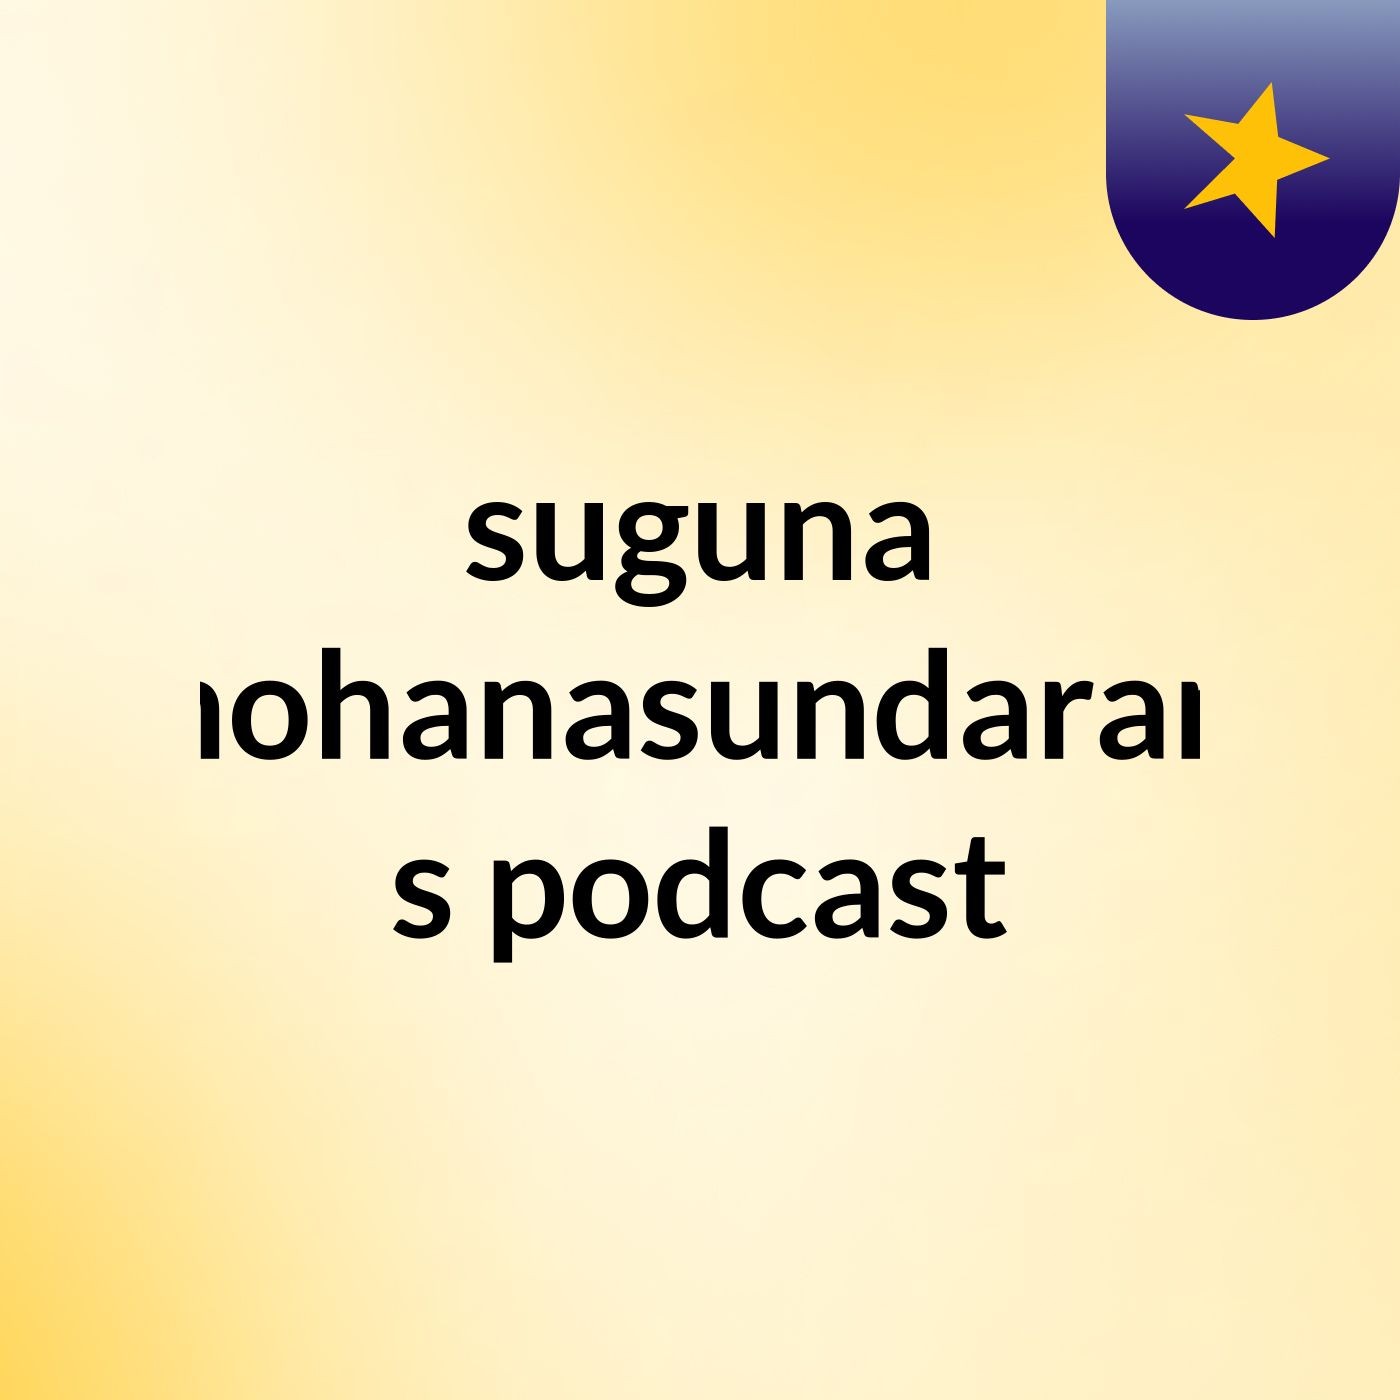 Episode 9 - suguna mohanasundaram's podcast